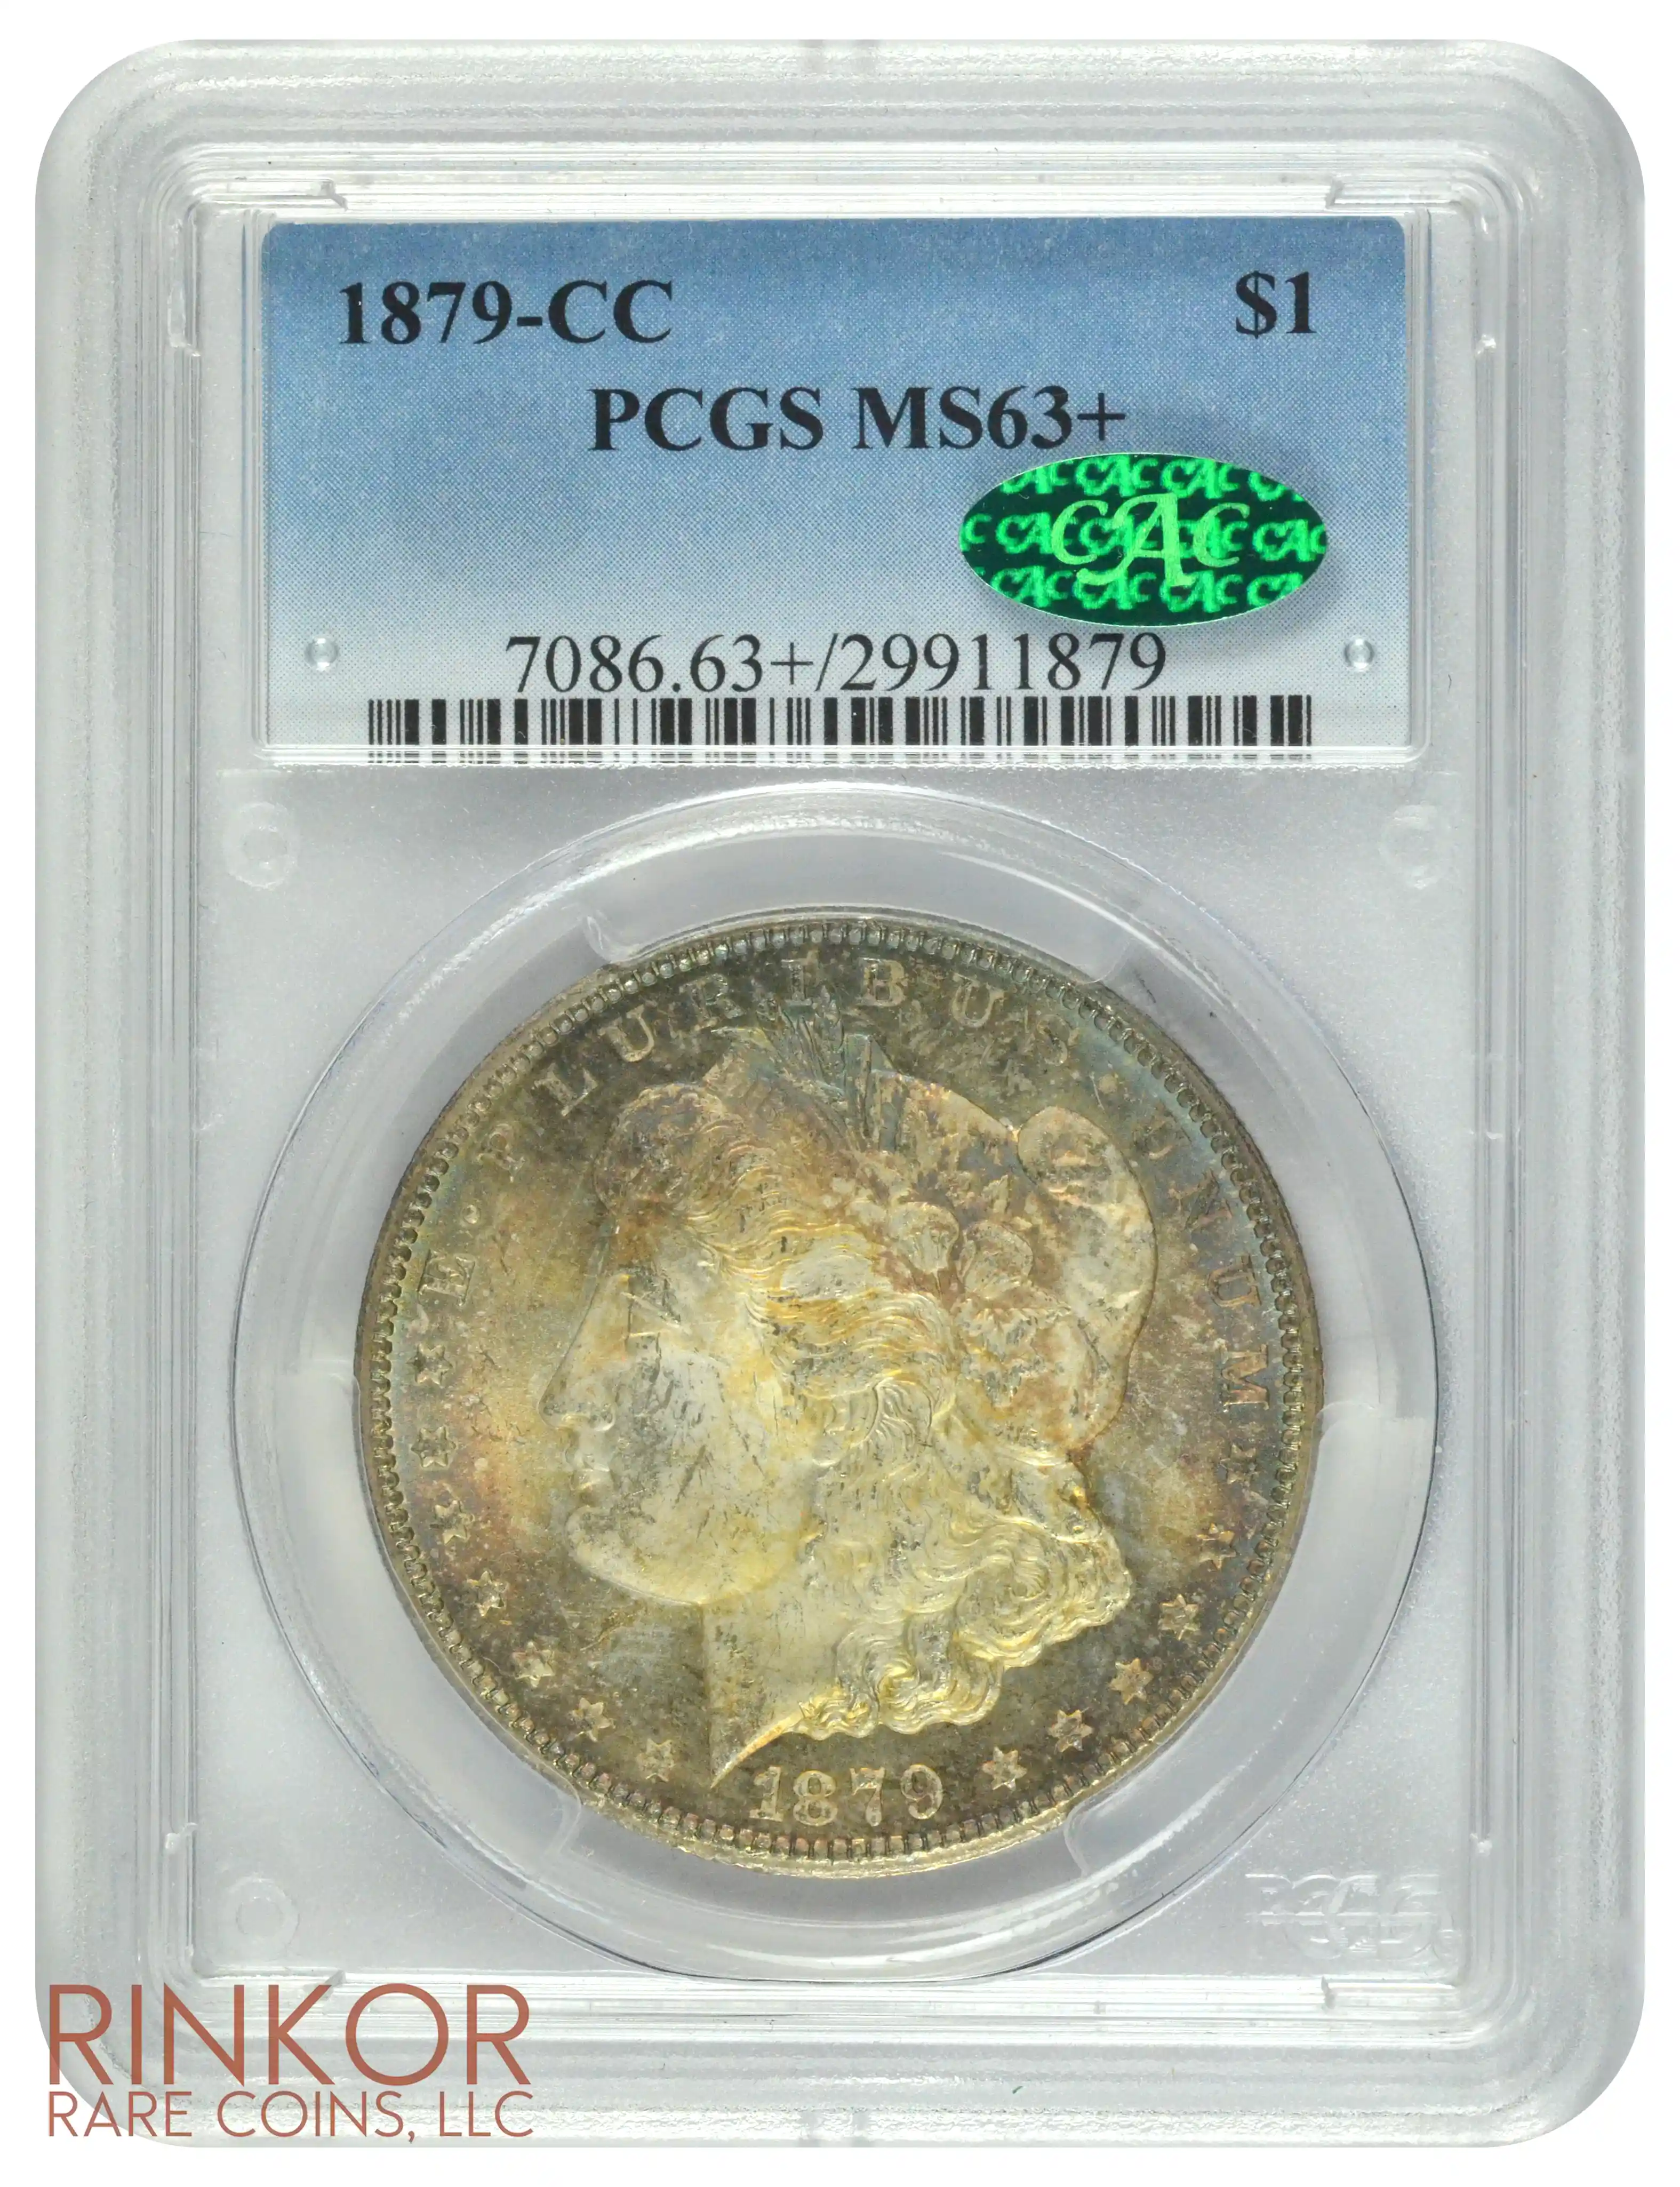 1879-CC $1 PCGS MS 63+ CAC